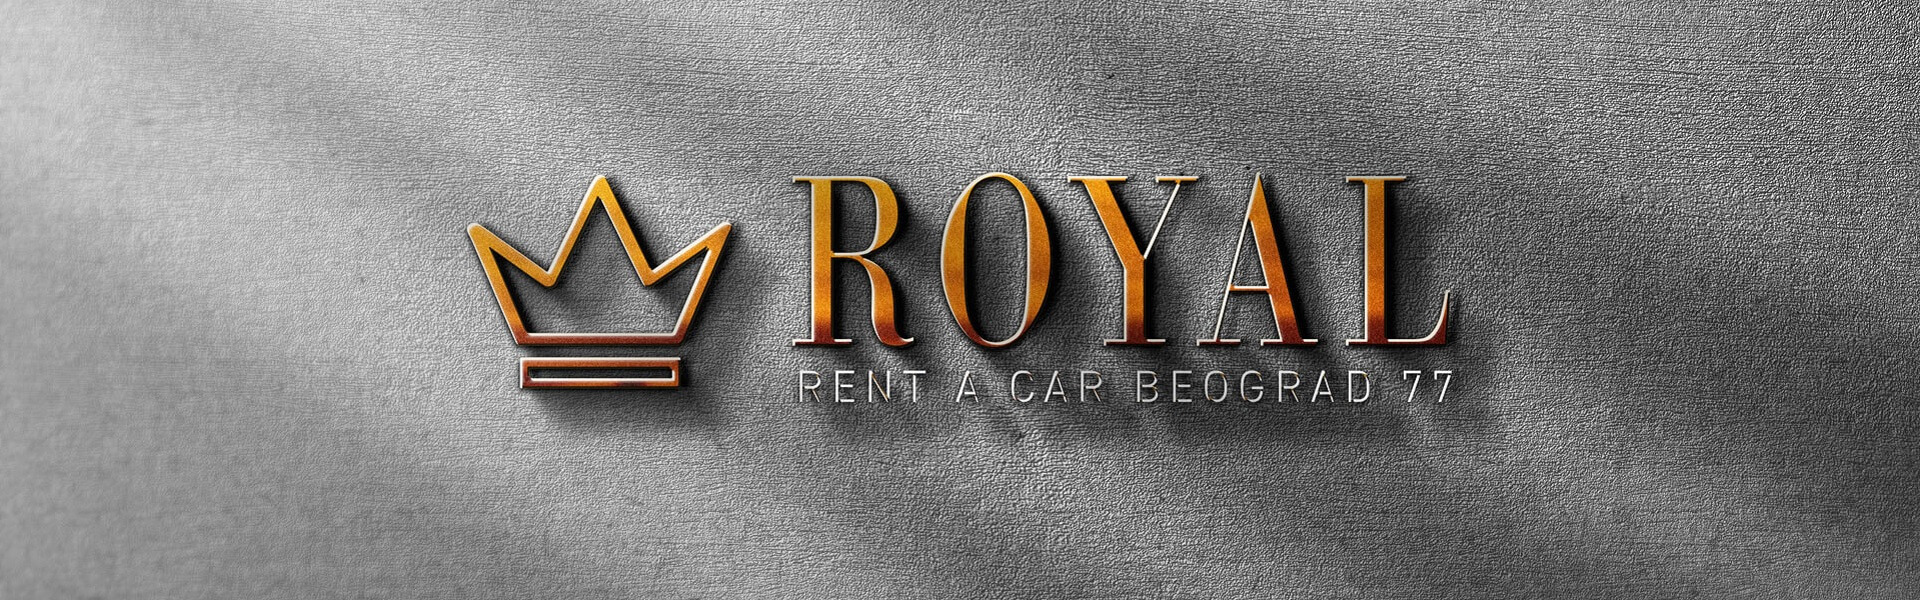 Cheap removals | Car rental Beograd Royal